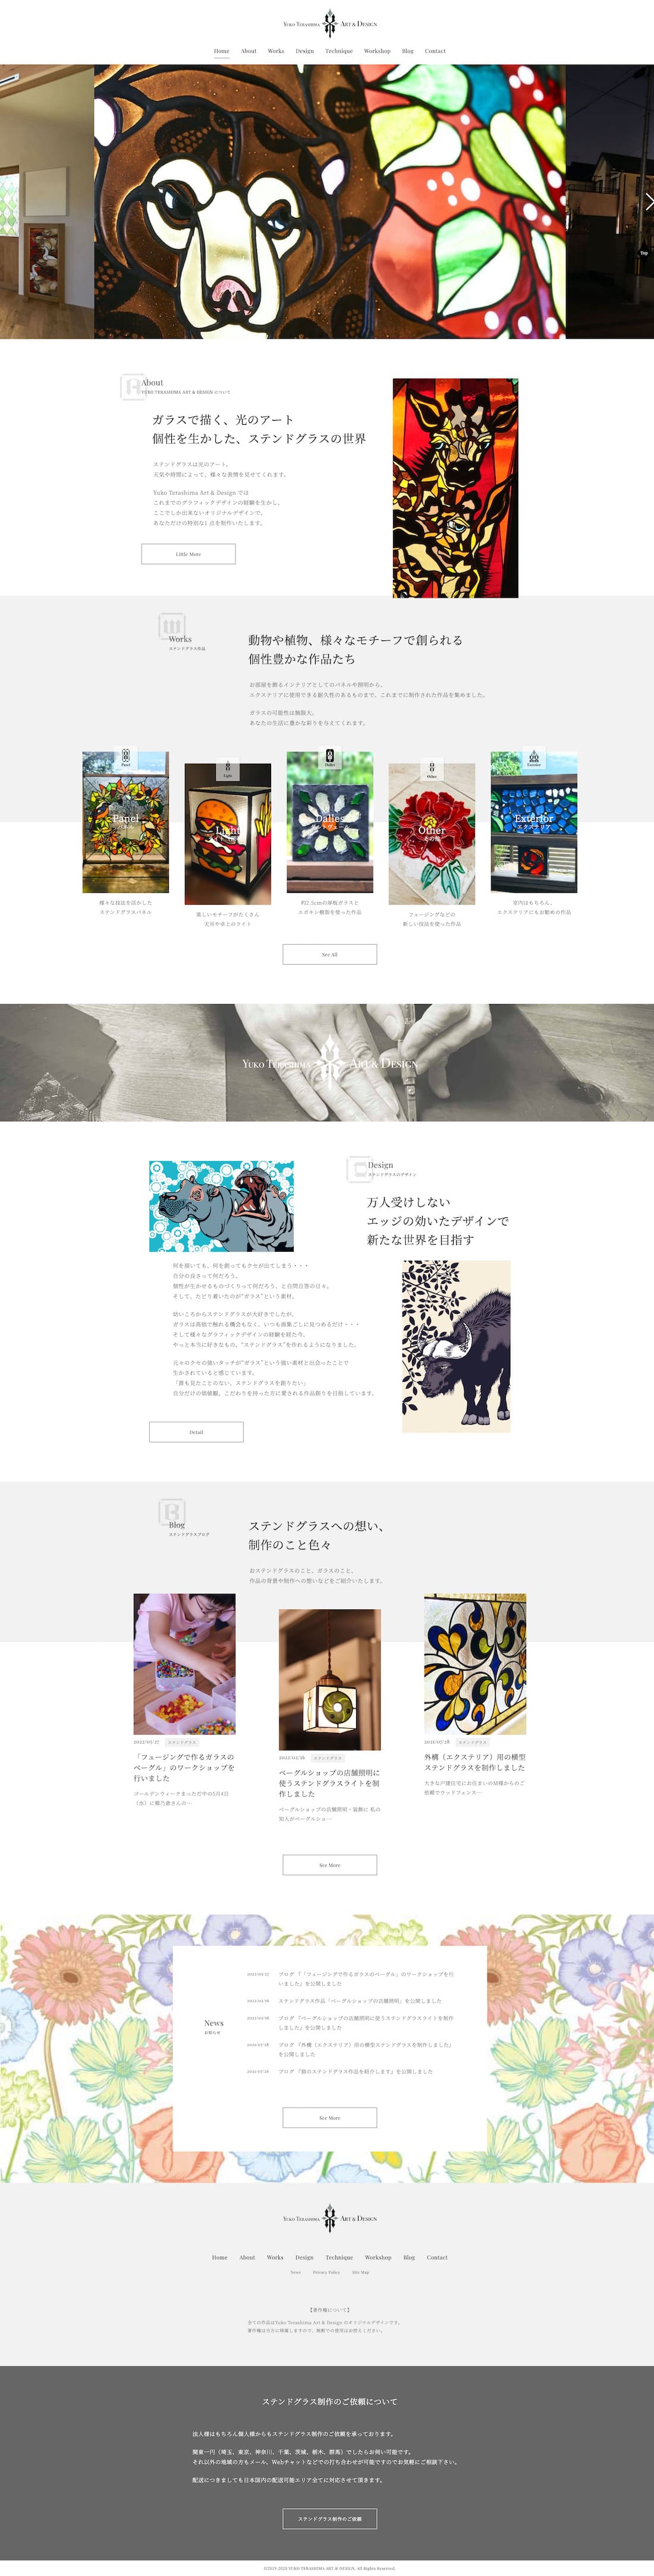 YUKO TERASHIMA ART & DESIGNホームページデザイン